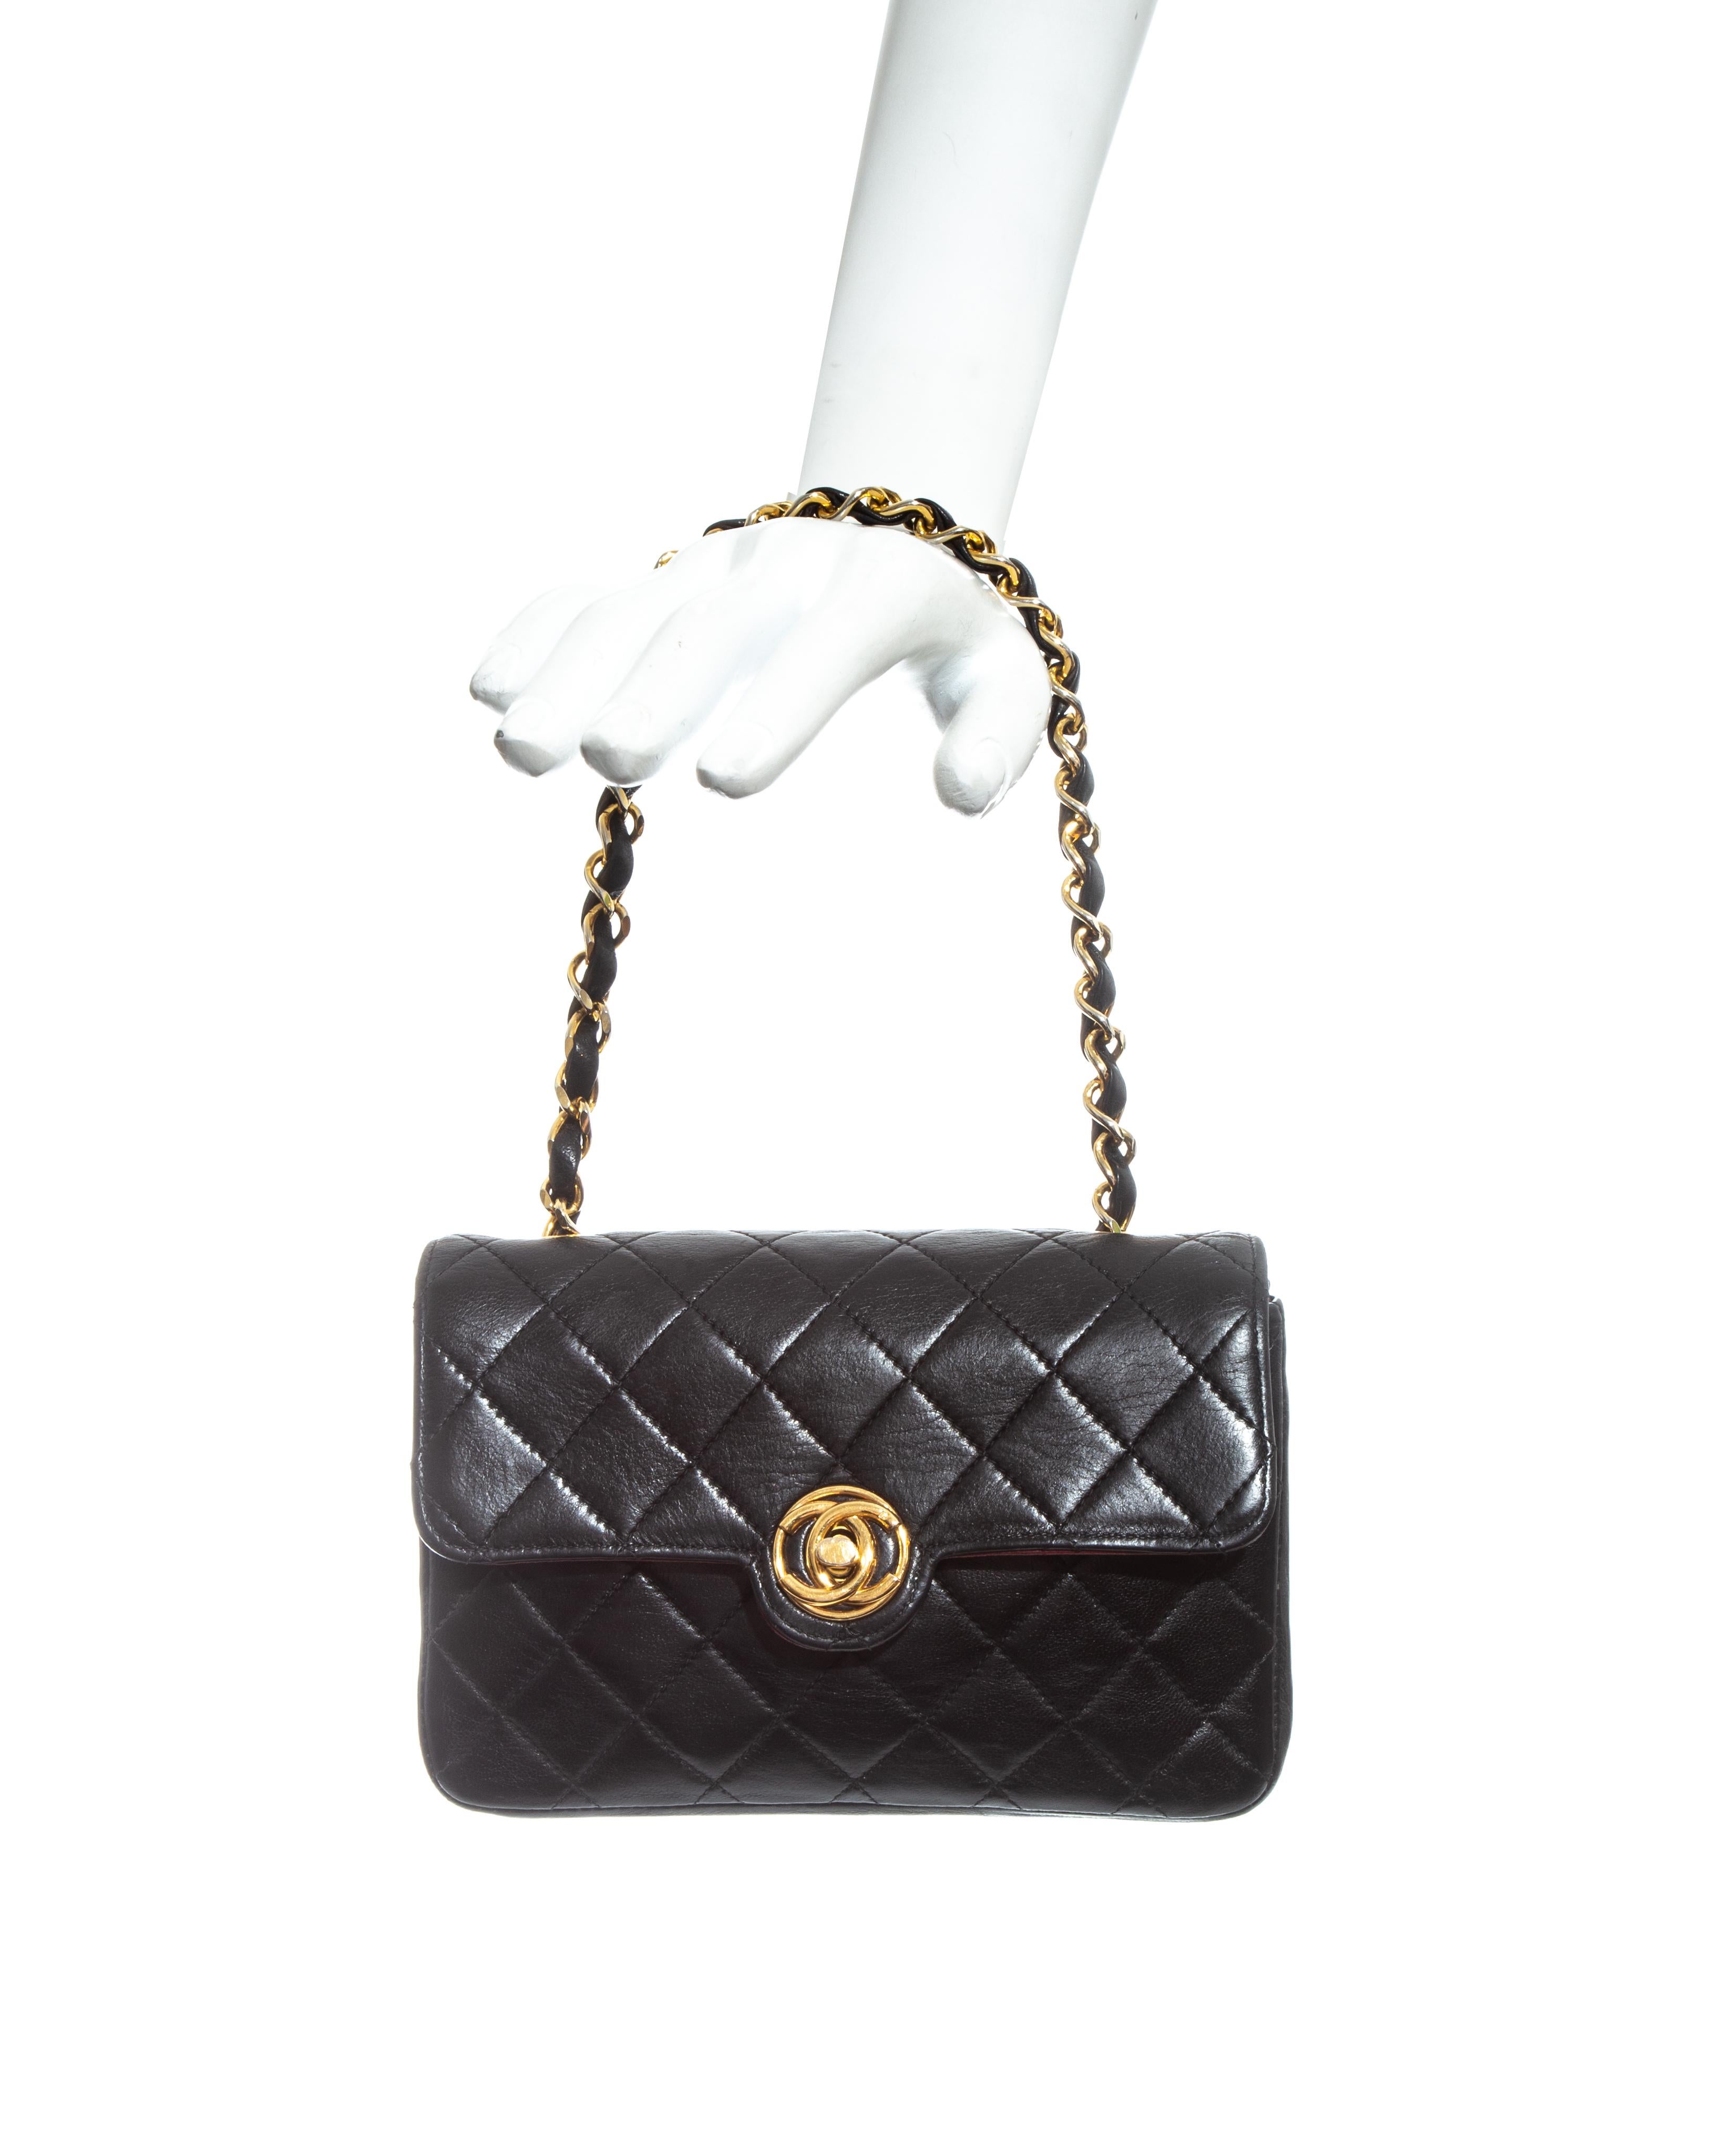 Black Chanel mini black quilted lambskin leather crossbody flap bag, c. 1986-8